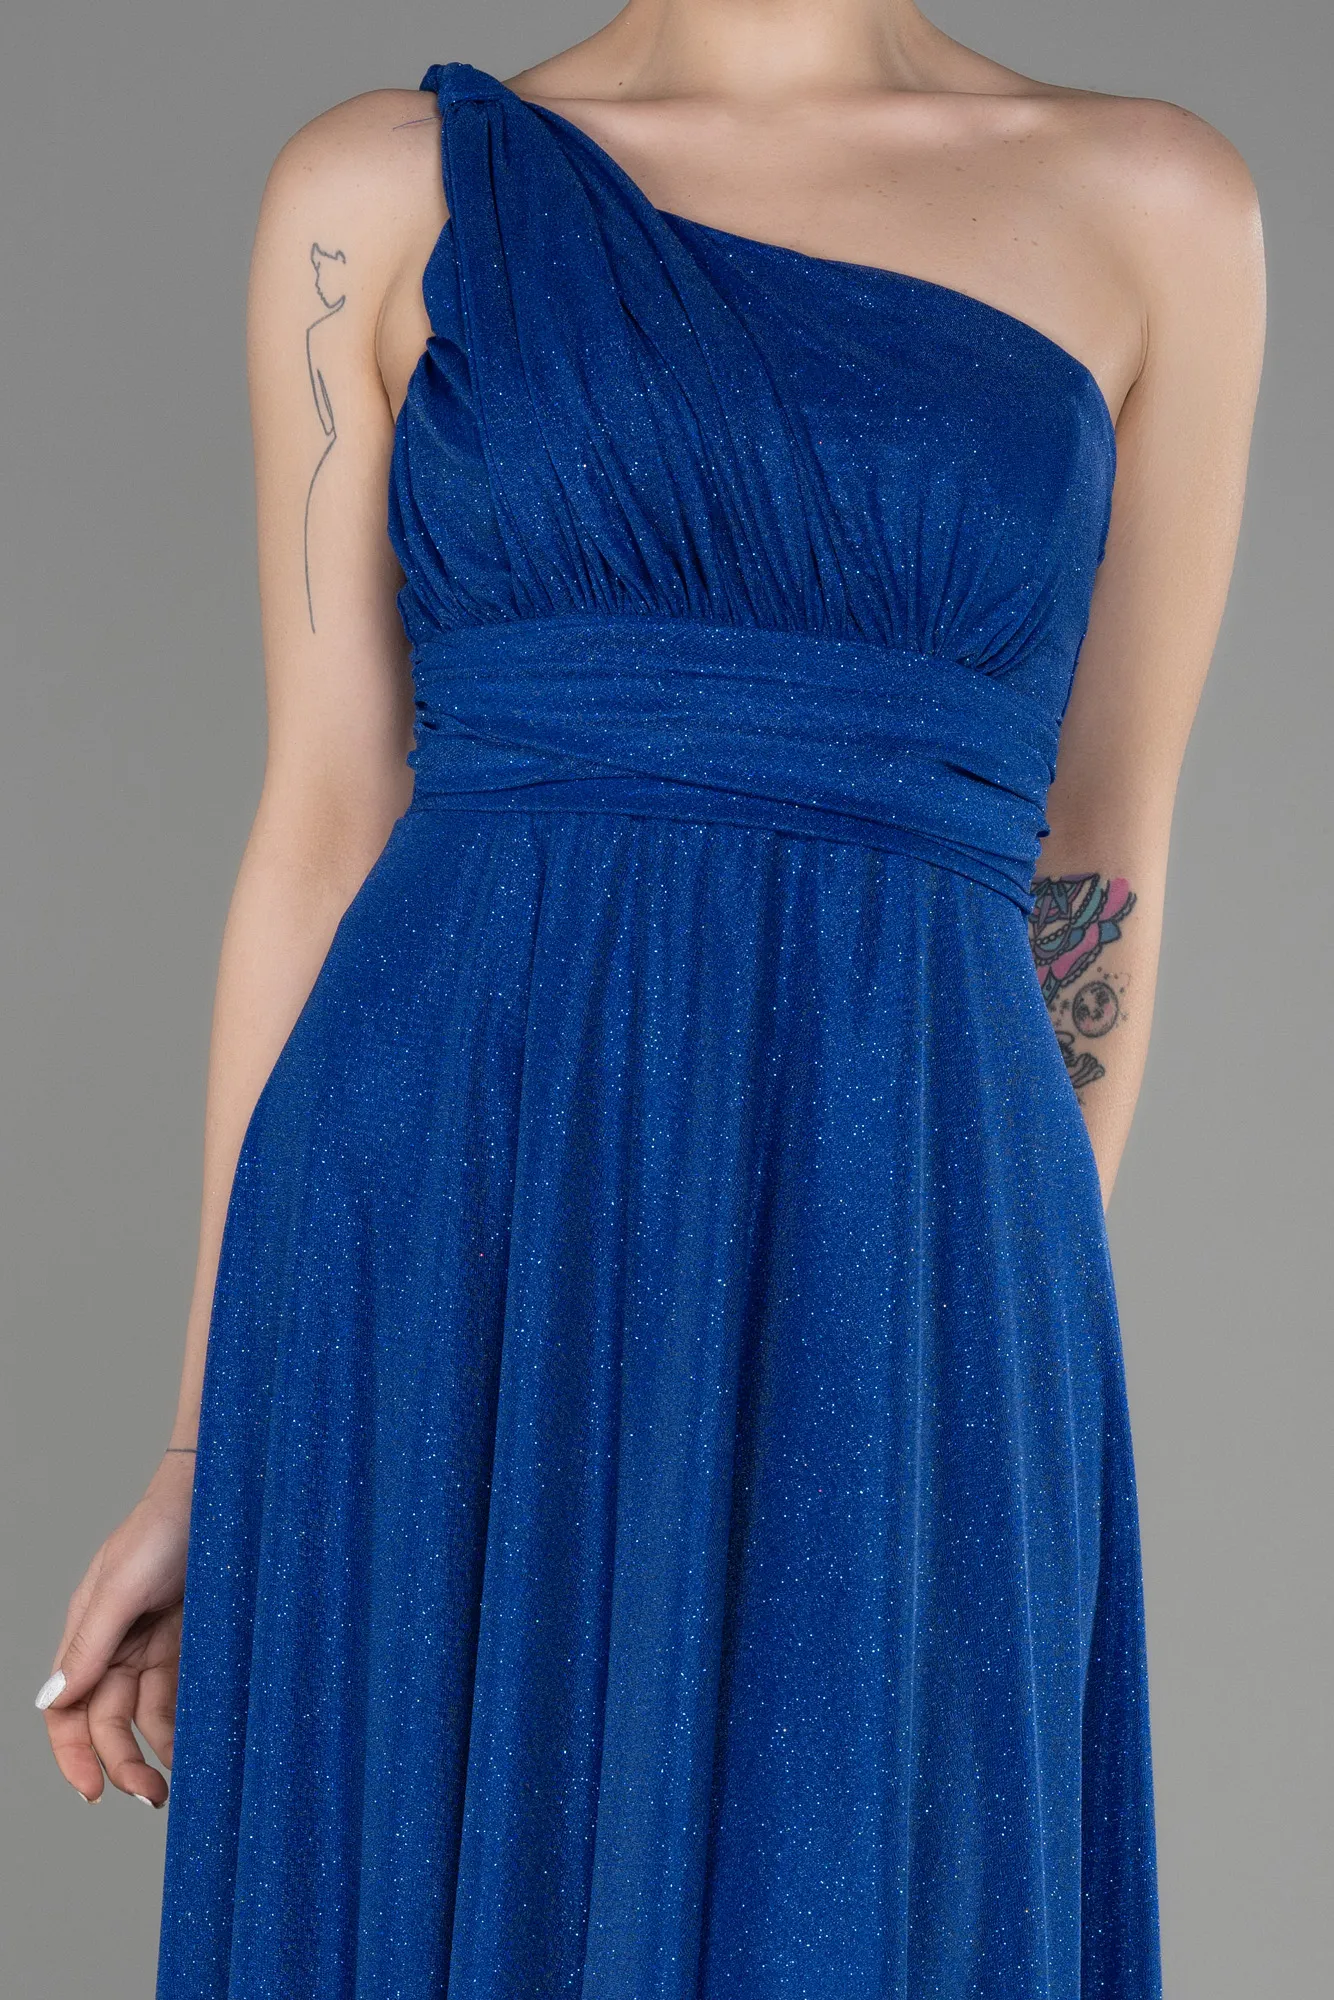 Sax Blue-Long Evening Dress ABU2834